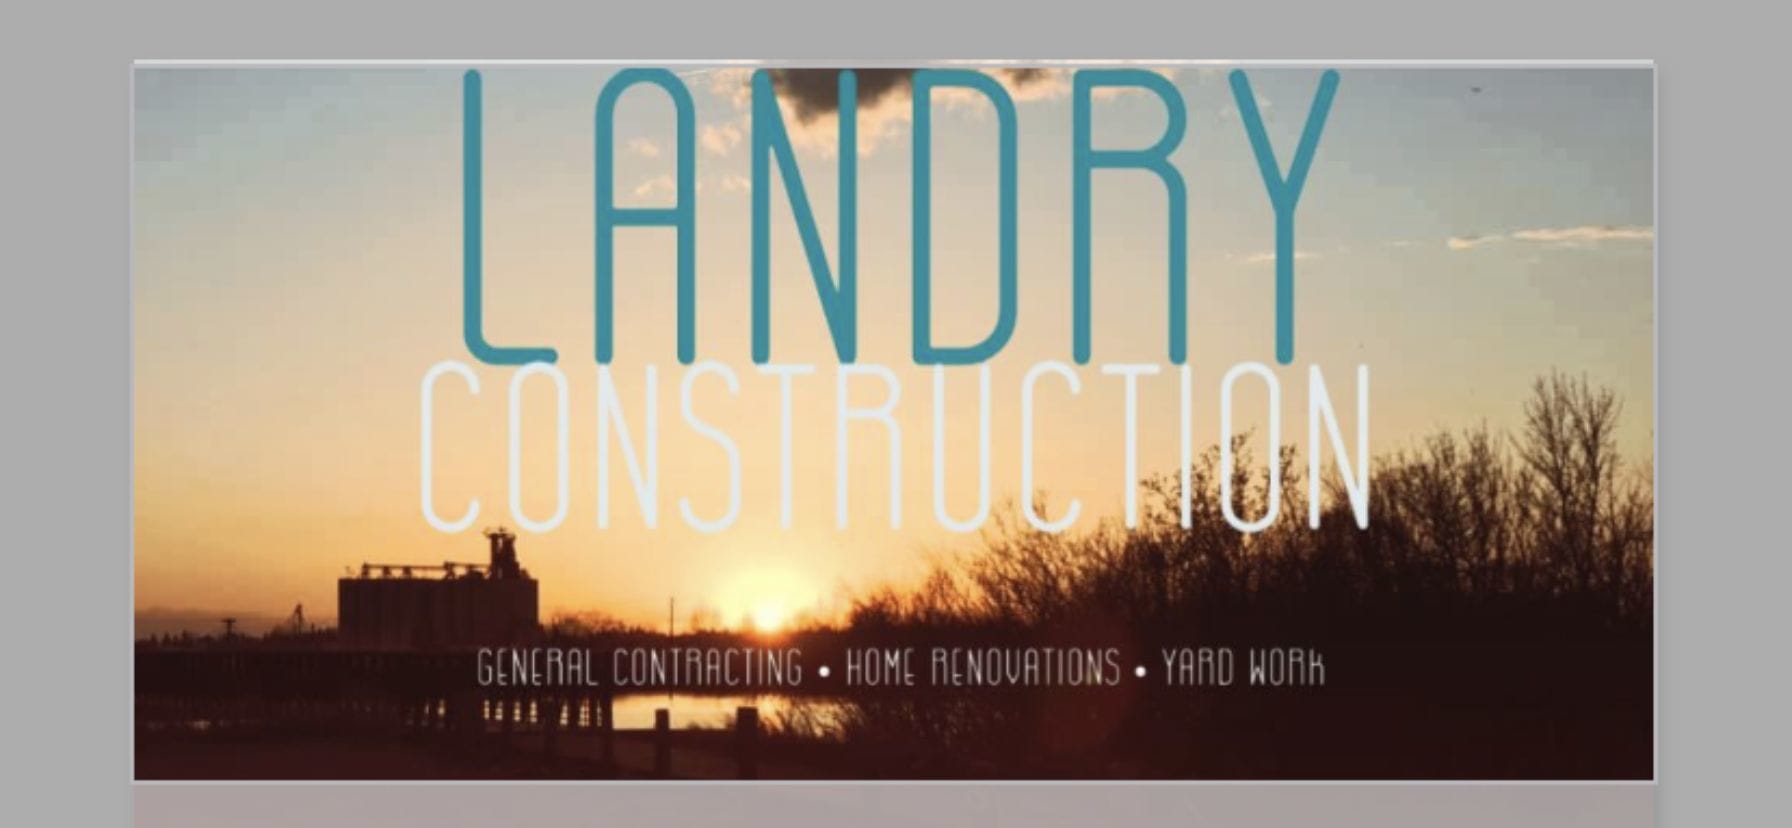 Landry Construction